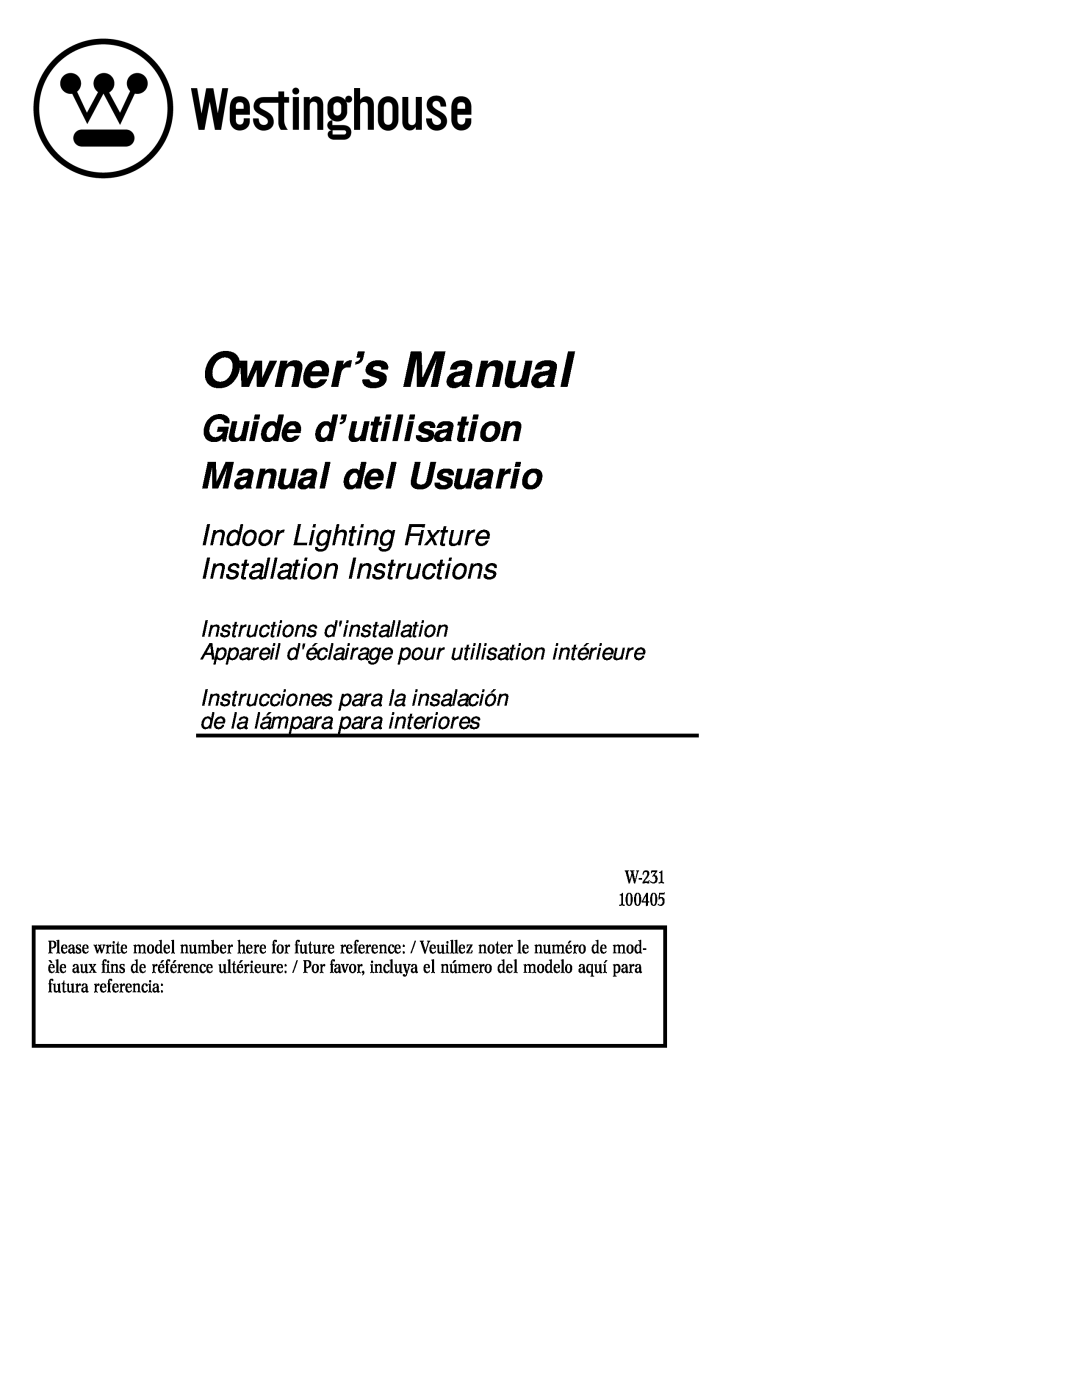 Westinghouse W-231 owner manual Guide d’utilisation Manual del Usuario, Indoor Lighting Fixture Installation Instructions 